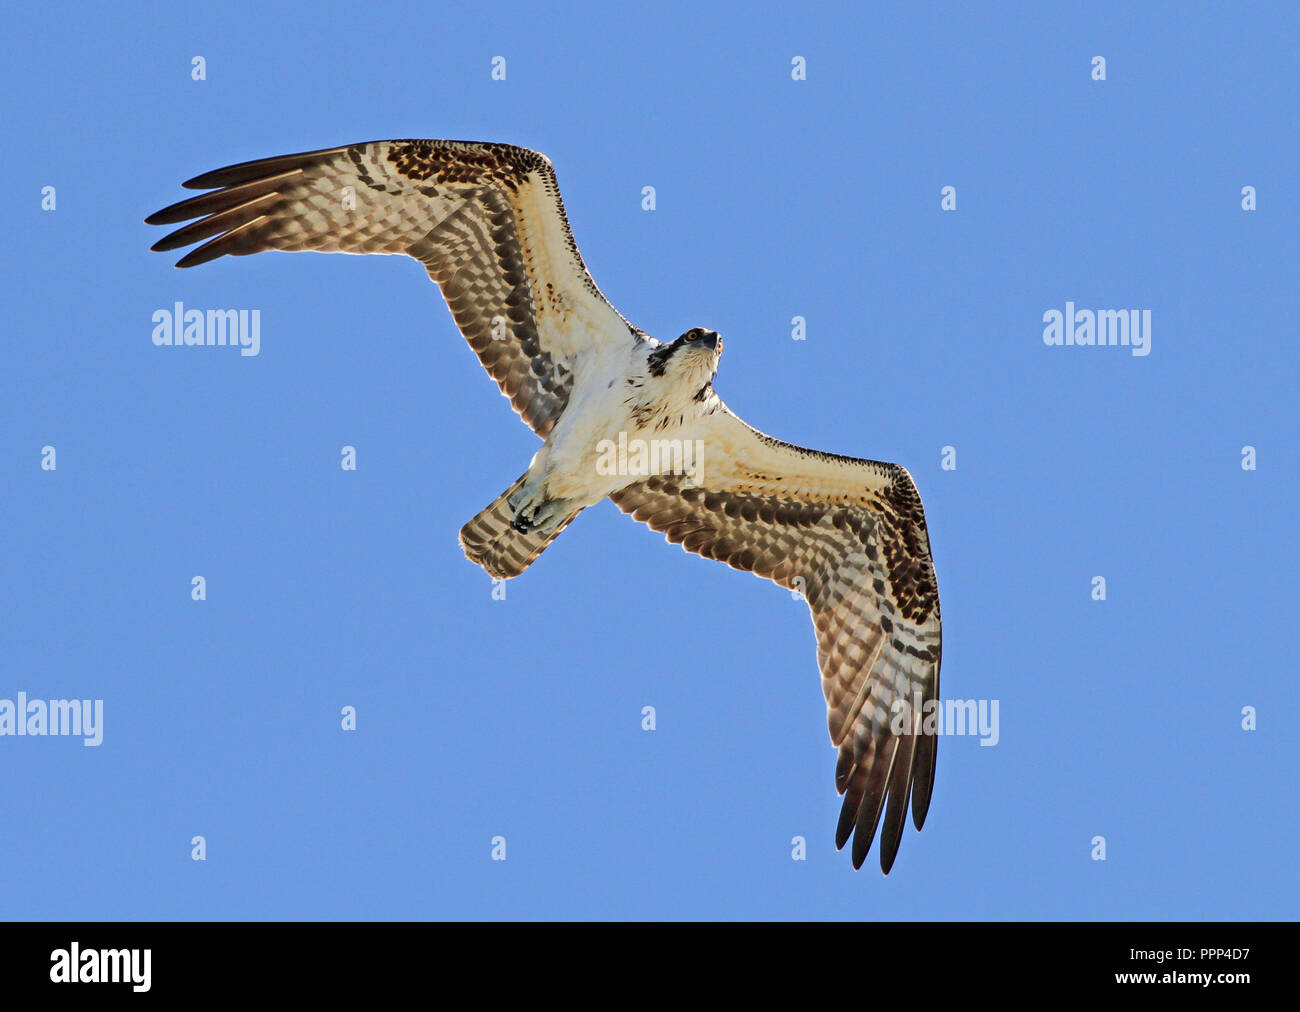 Overhead view of an an osprey raptor in flight Stock Photo